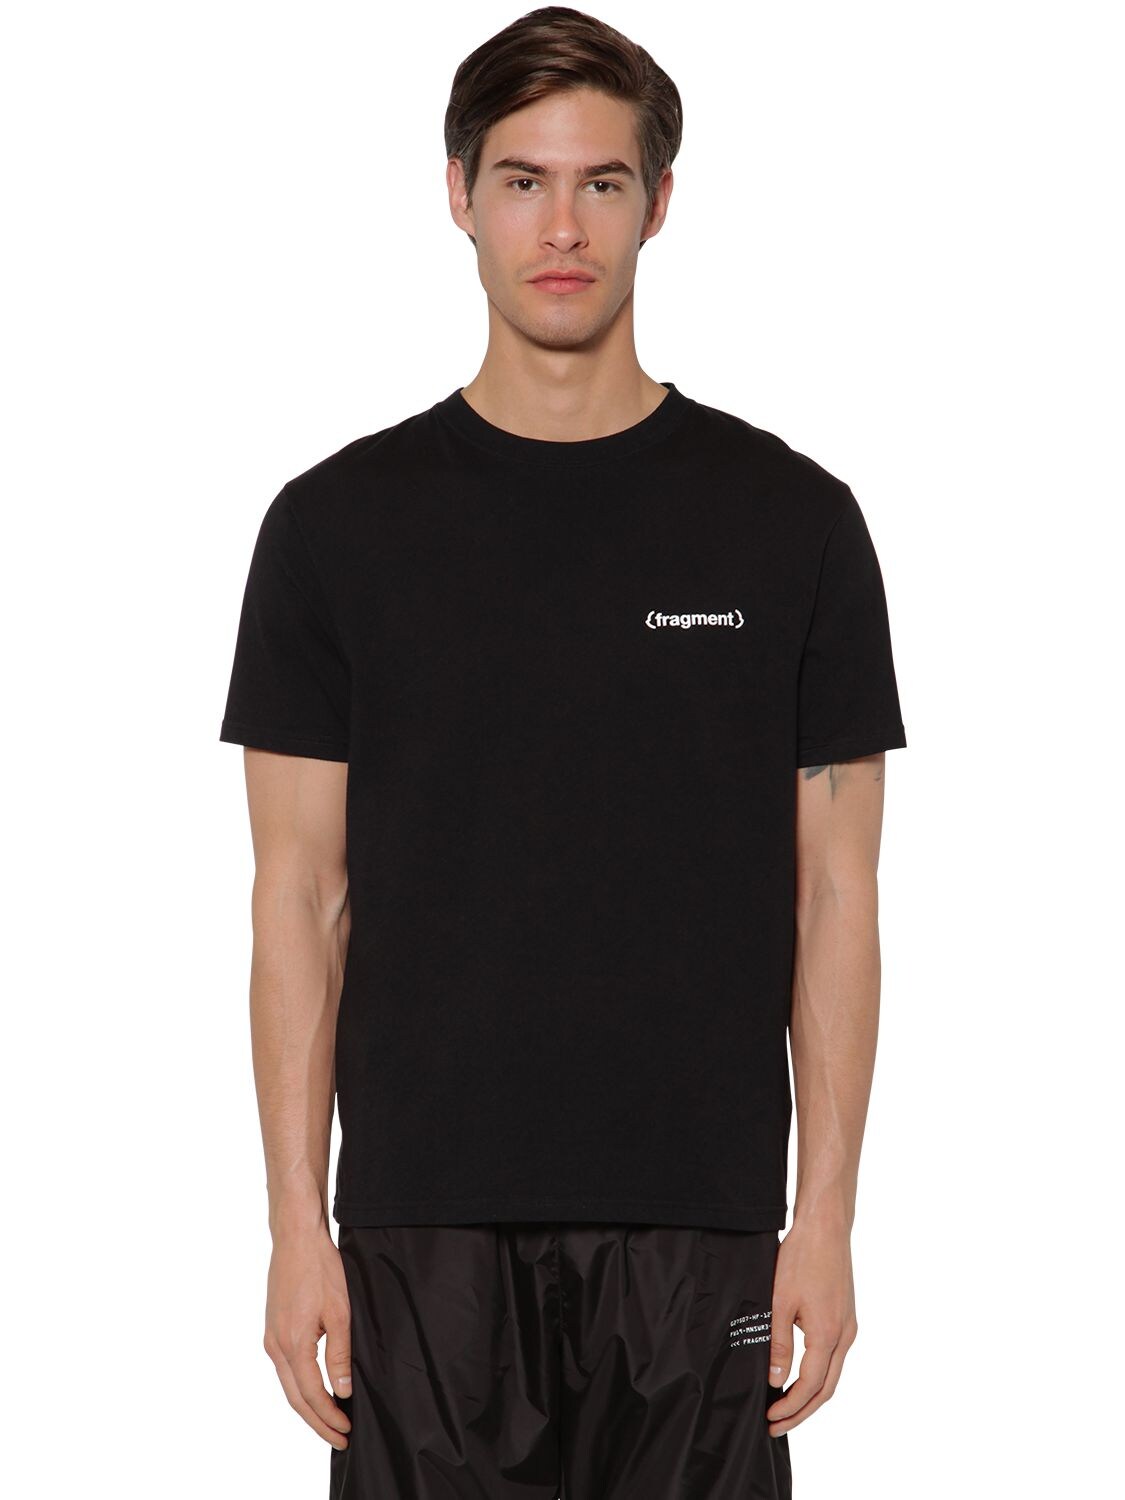 Moncler Genius Fragment Cotton Jersey T-shirt In Black